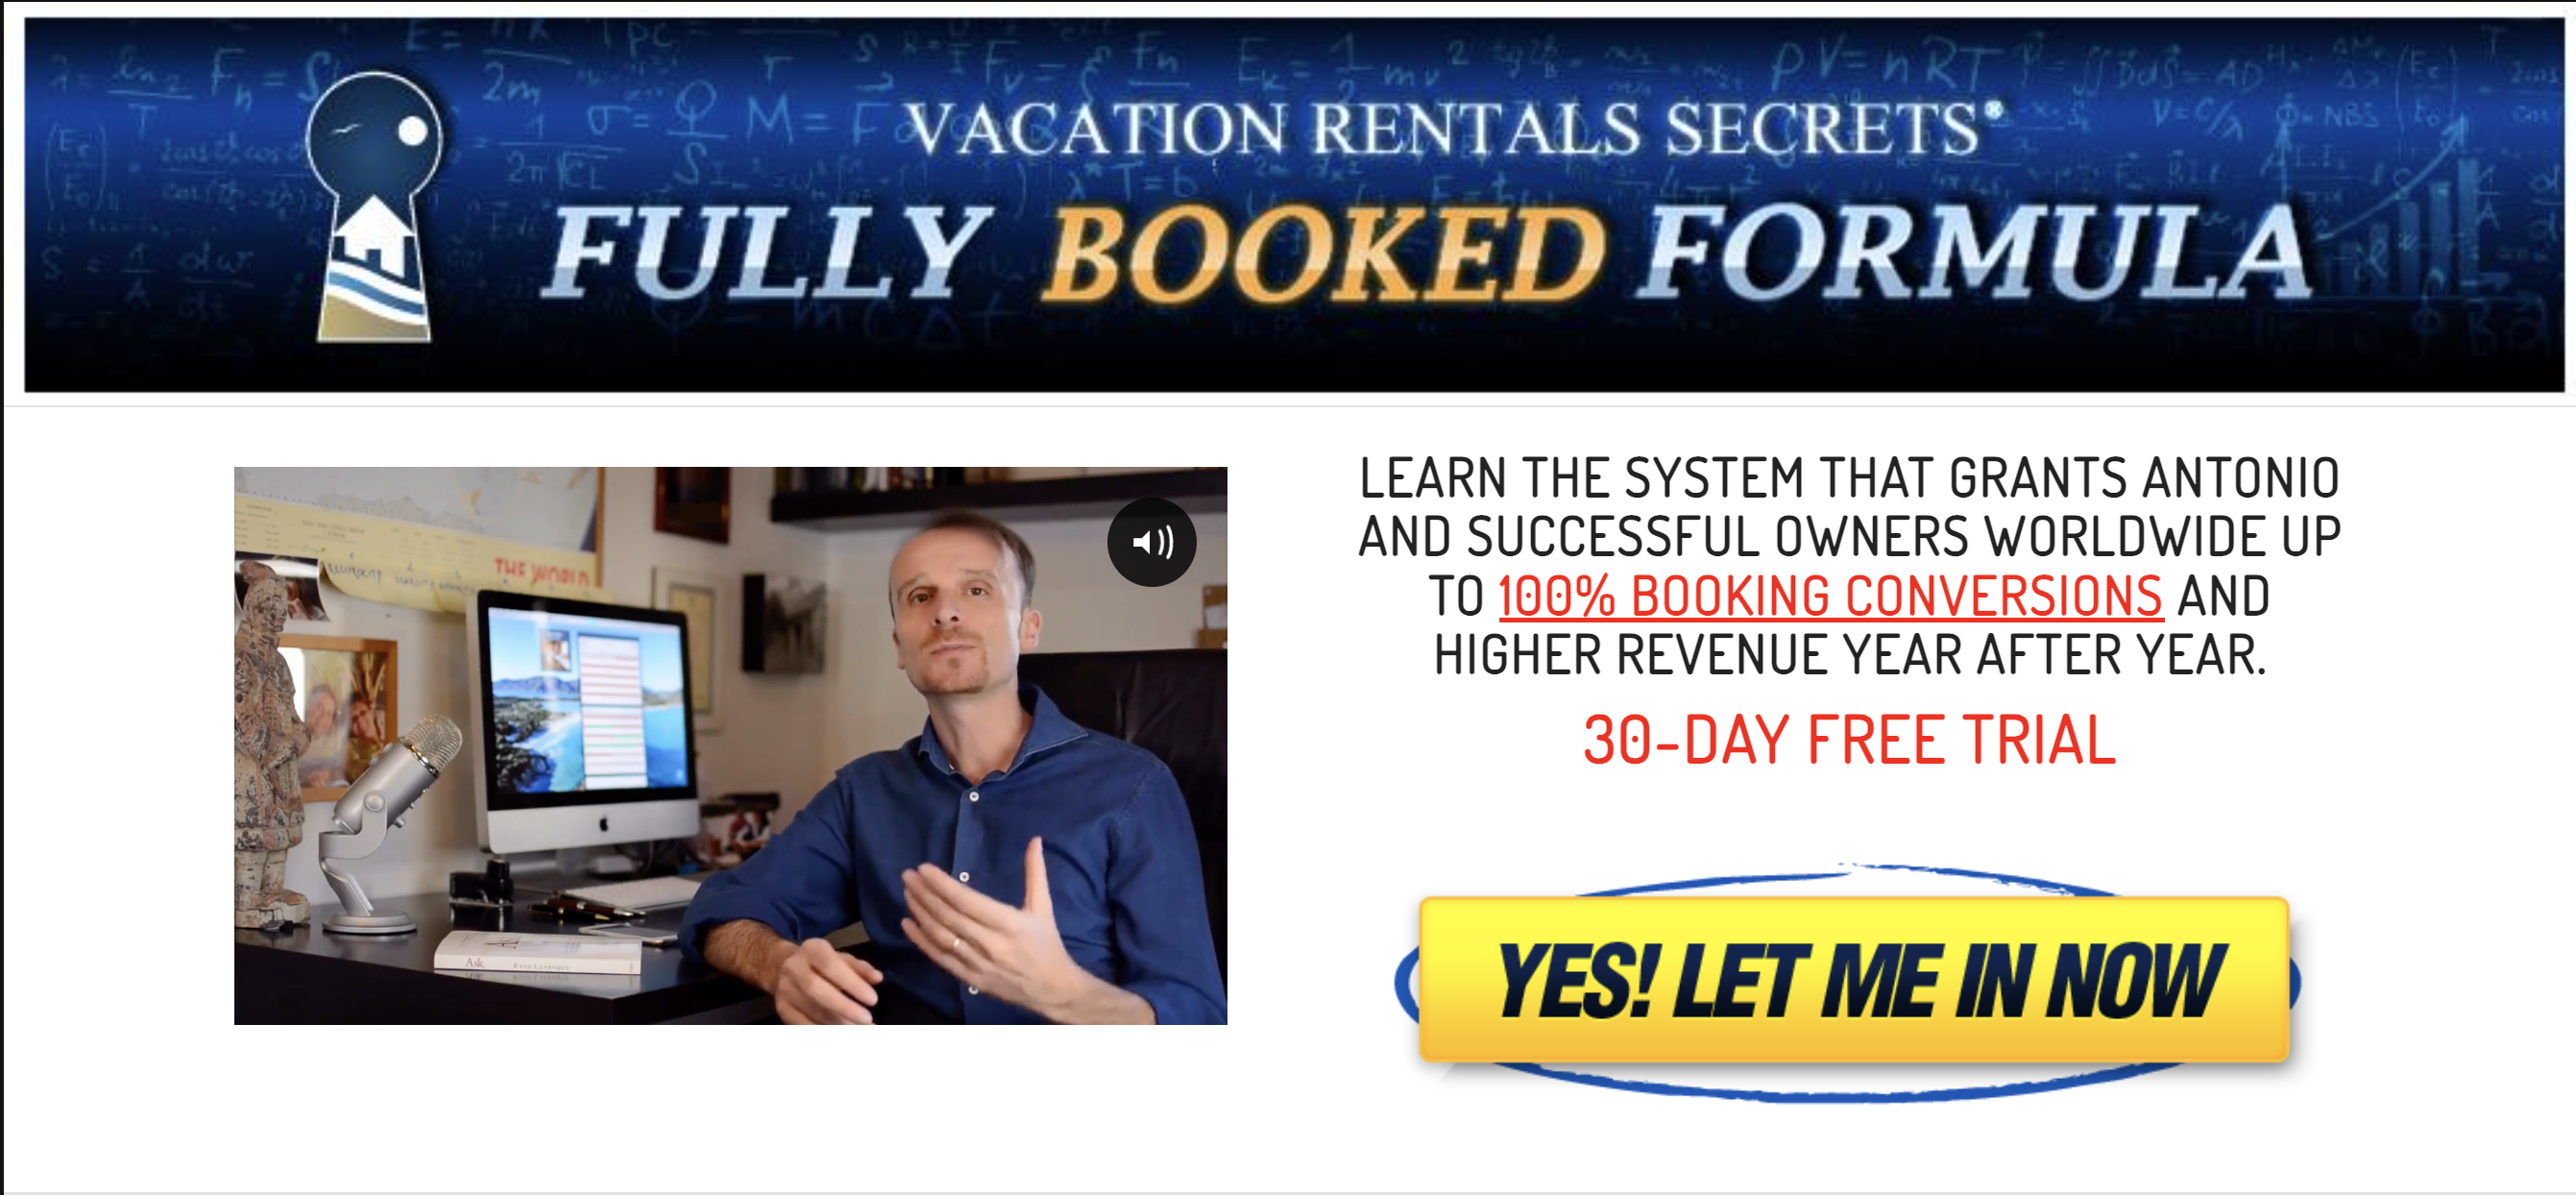 Vacation Rental Secrets course listing